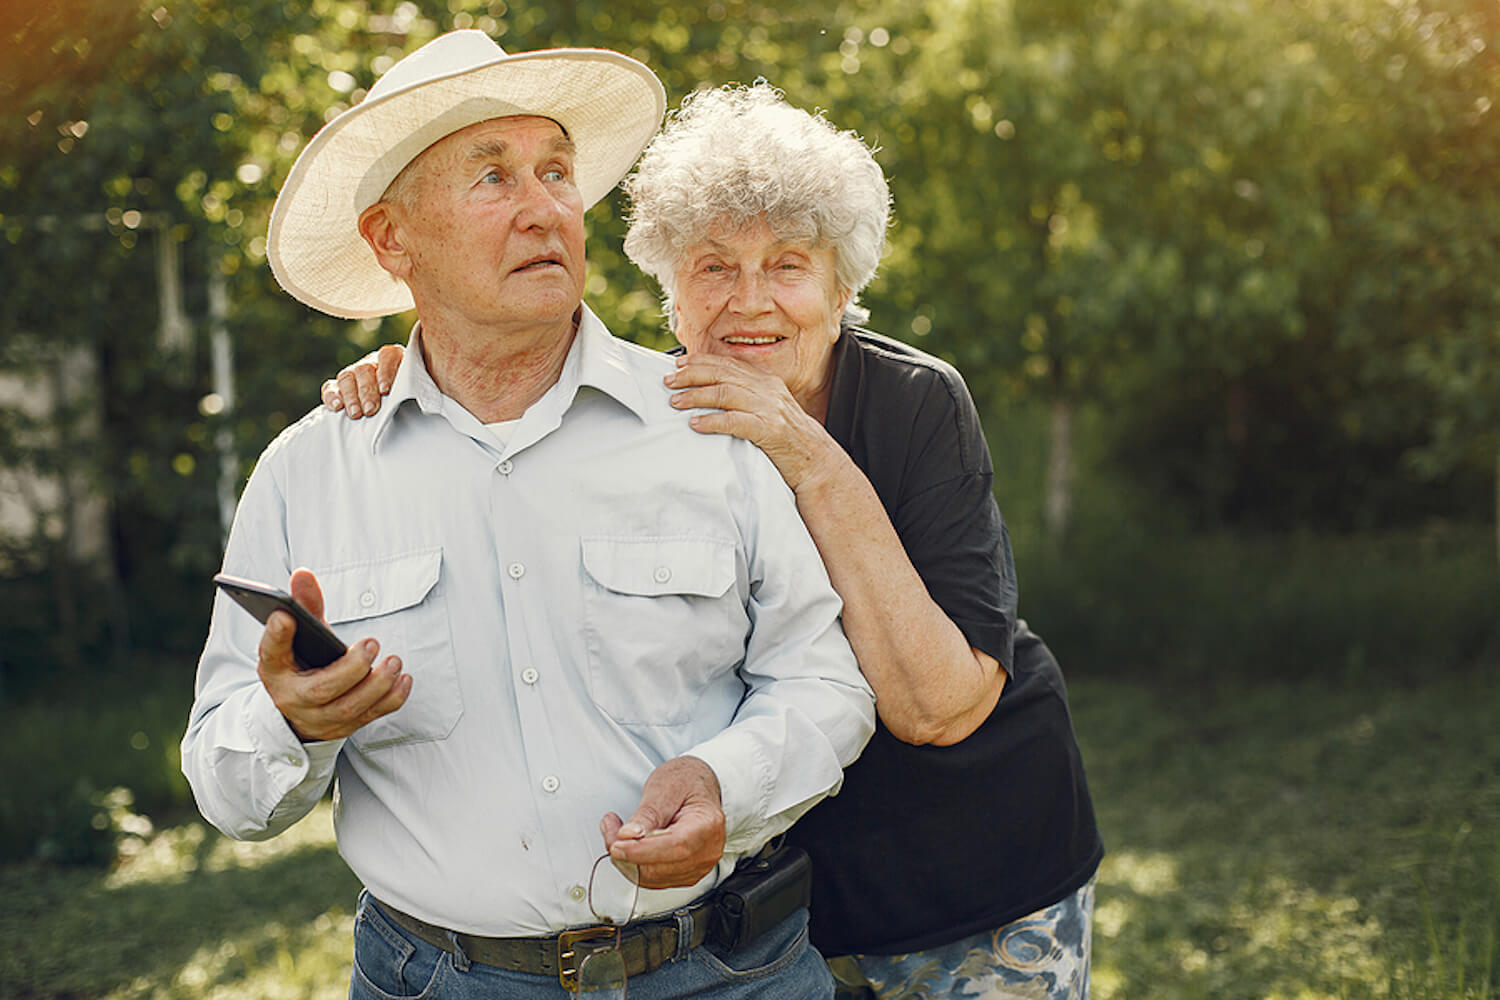 Image shows beautiful older couple enjoying a walk in summer greenery.